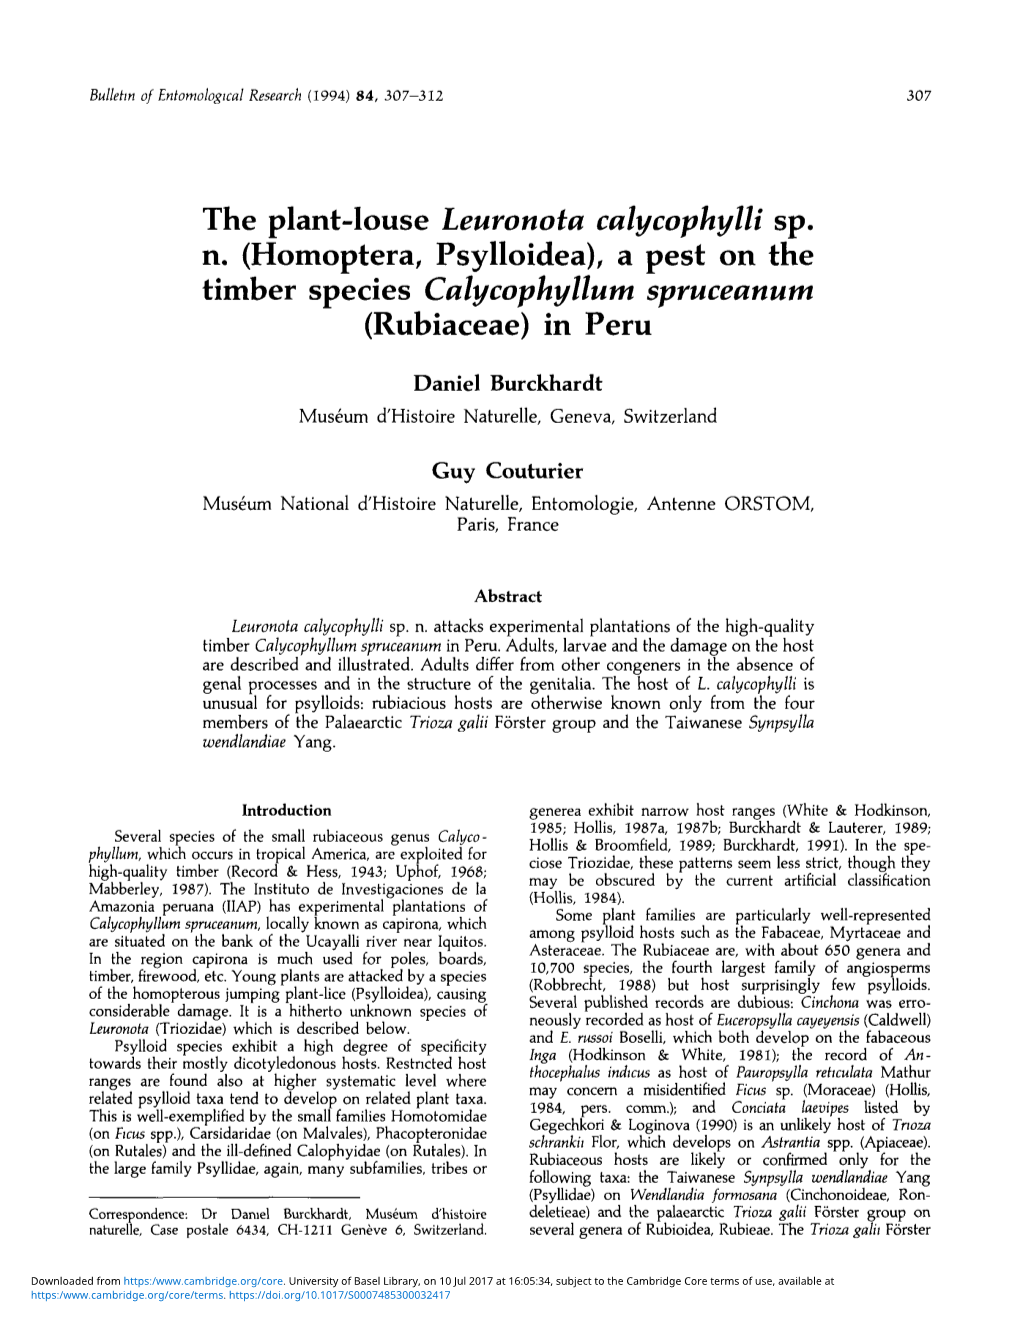 The Plant-Louse Leuronota Calycophylli Sp. N